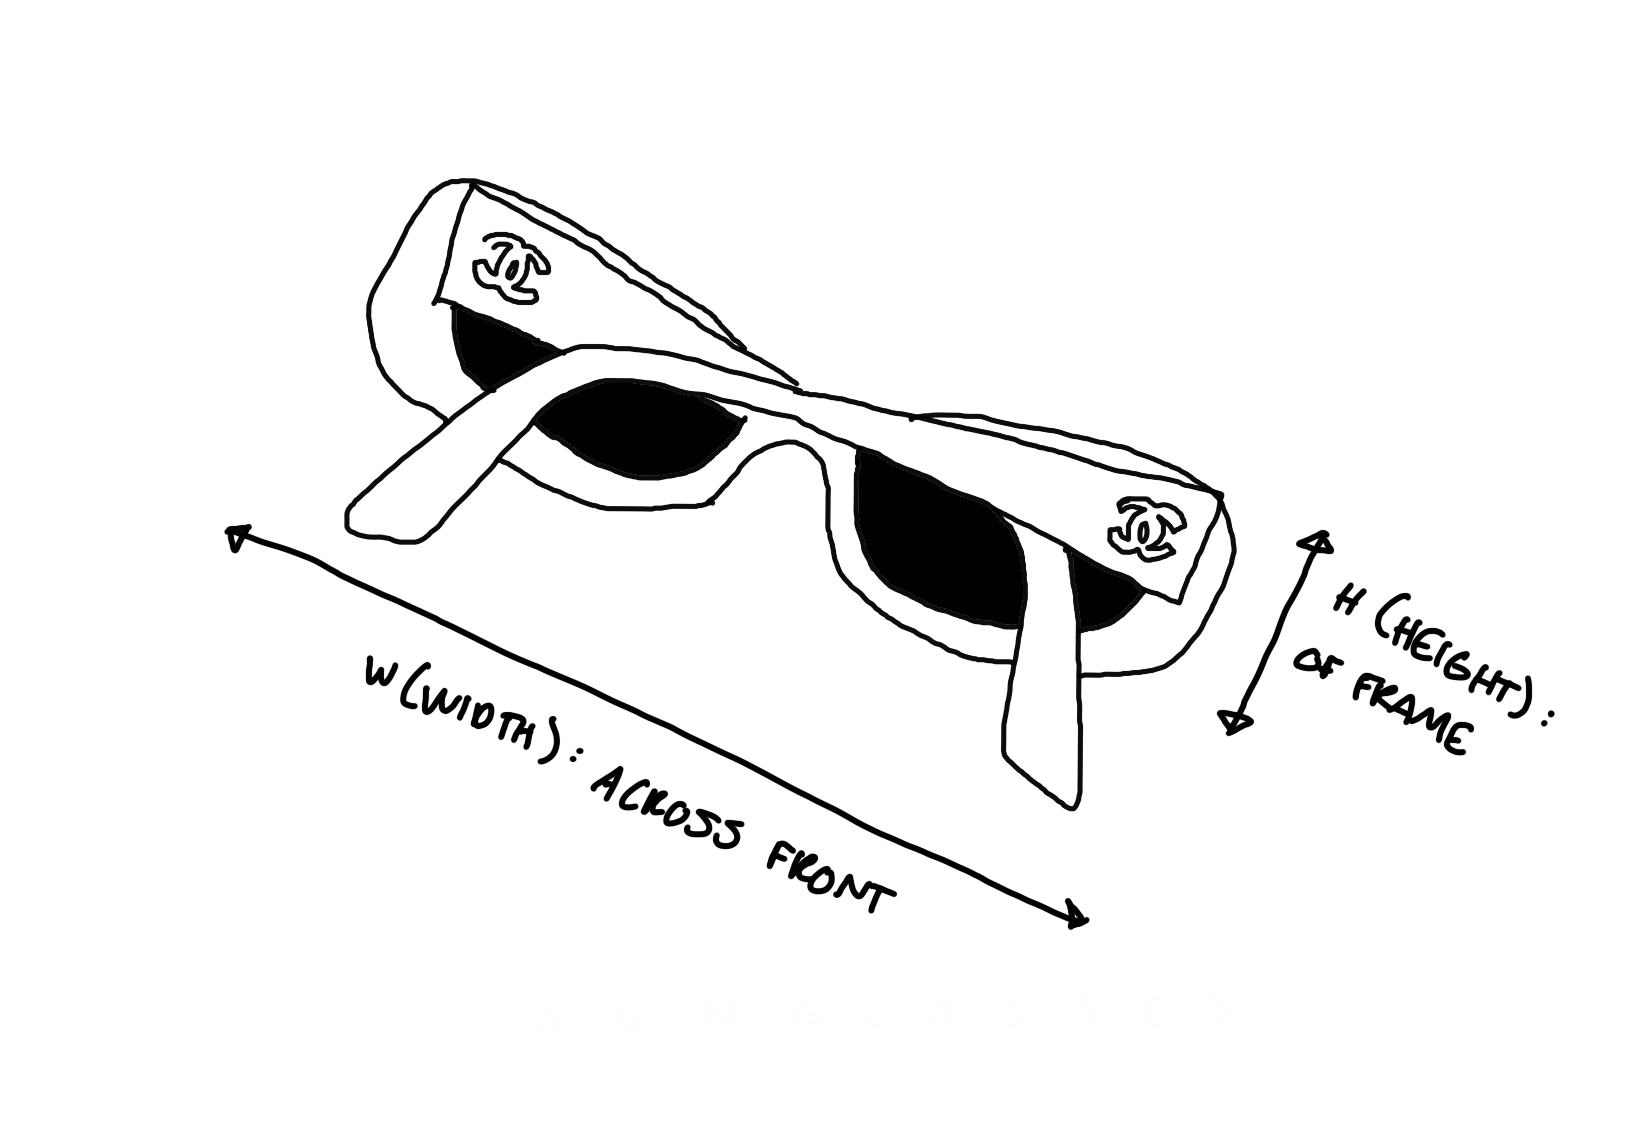 Chanel Blue Oval Logo Sunglasses